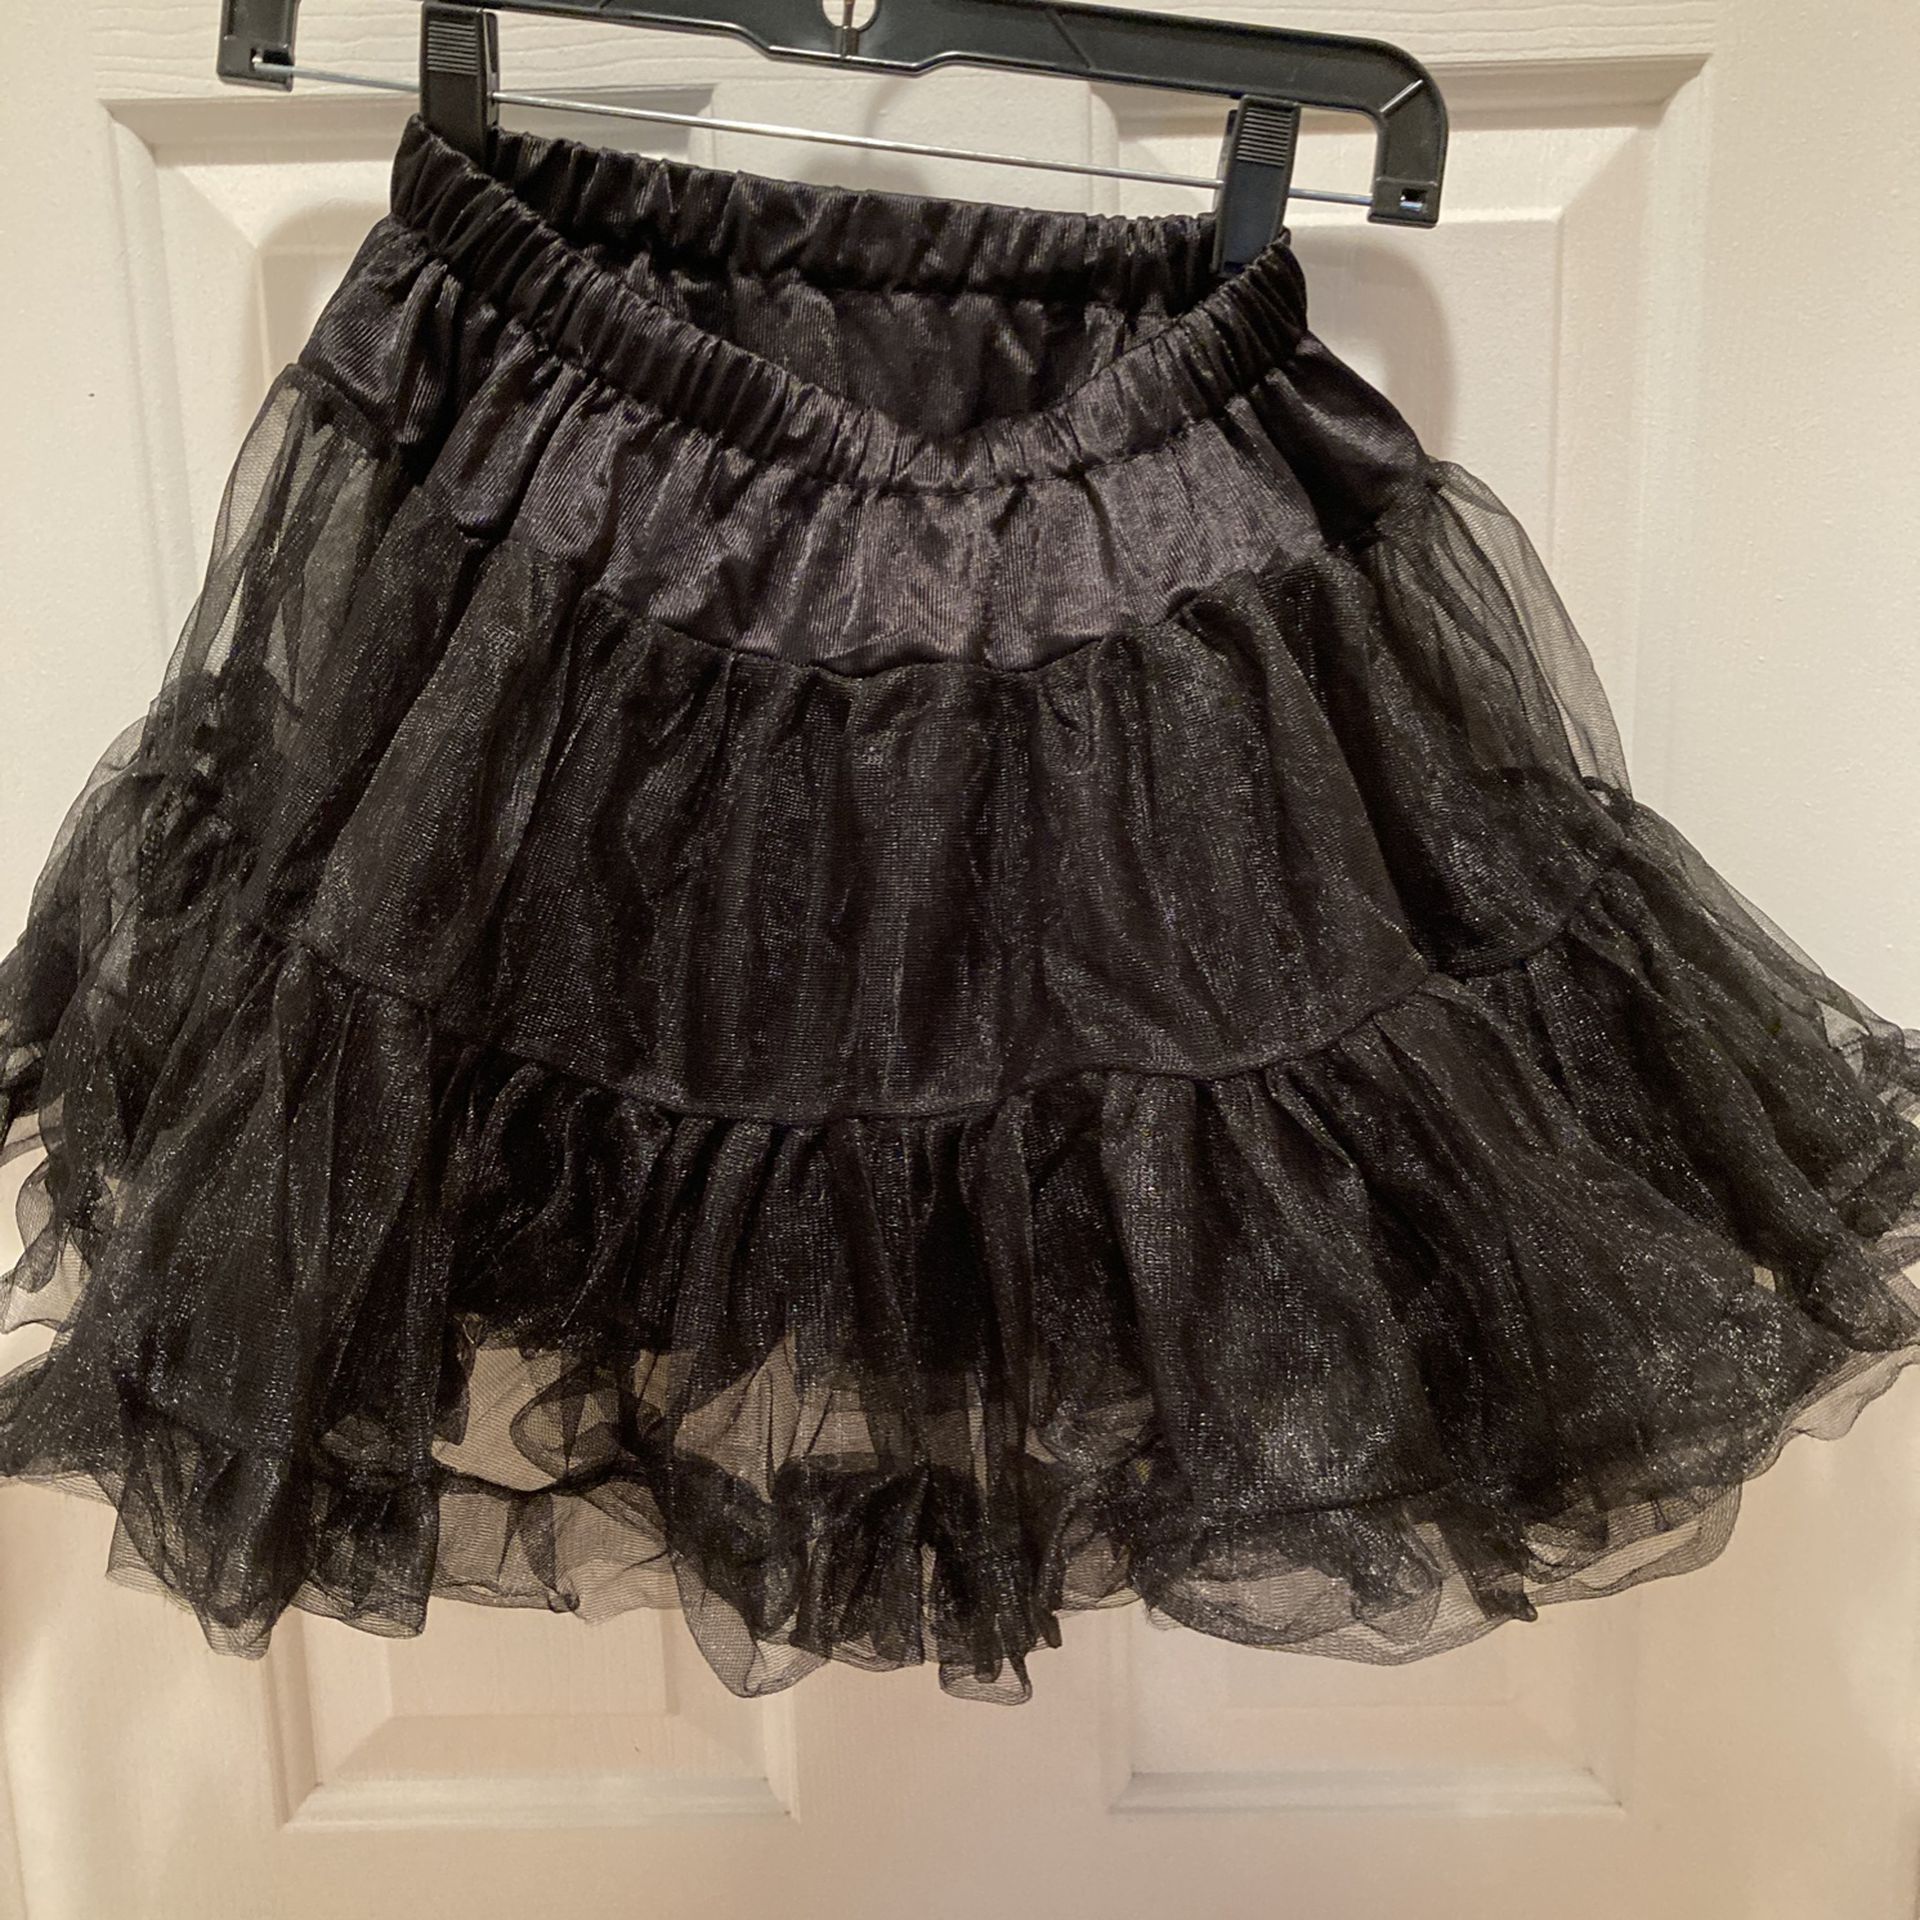 Black Petticoat One Size Fits Most Spirit Halloween